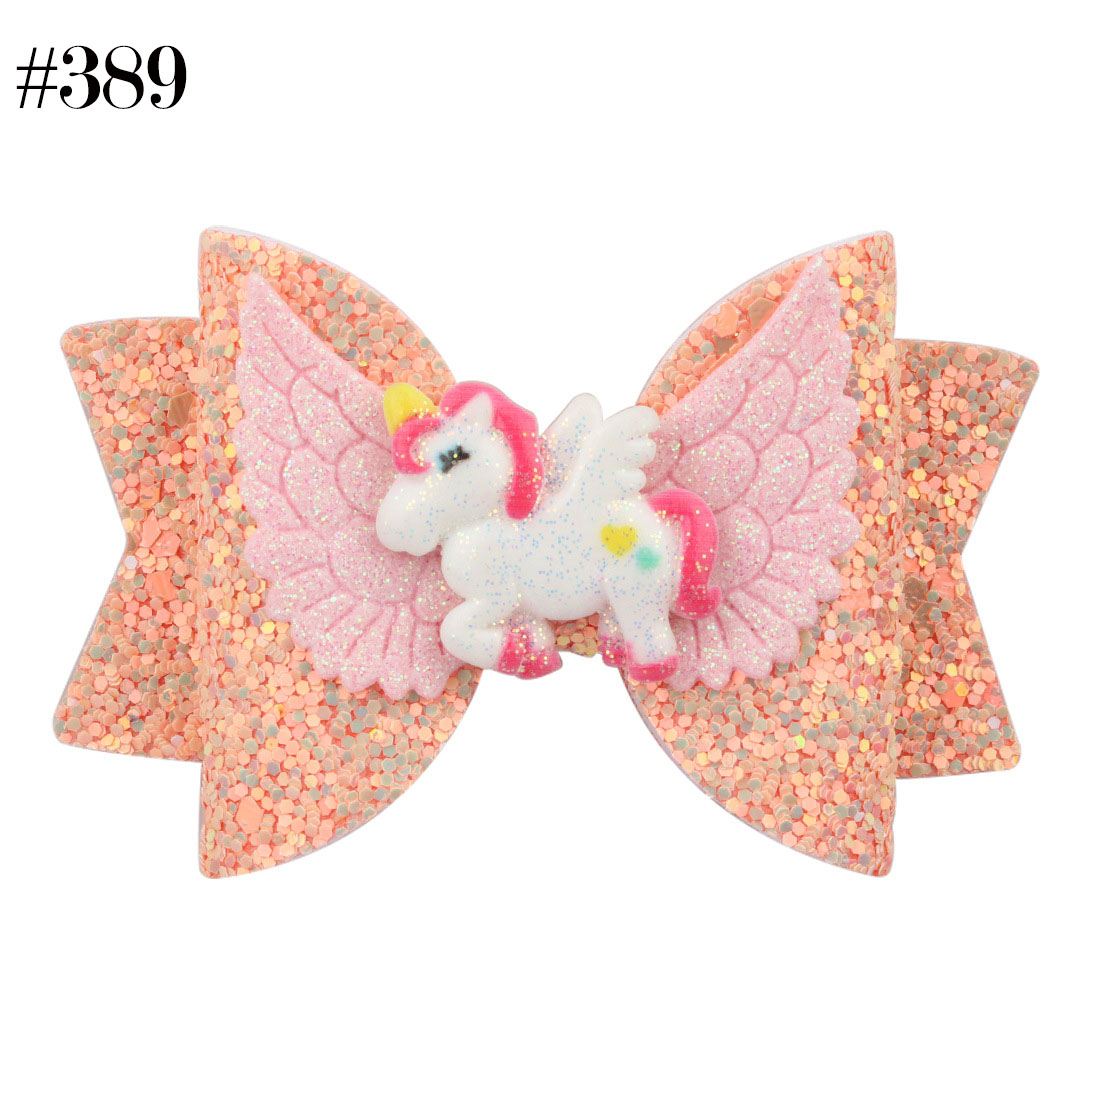 Glitter Hair Bow Unicorn and Mermaid Wings hair bows